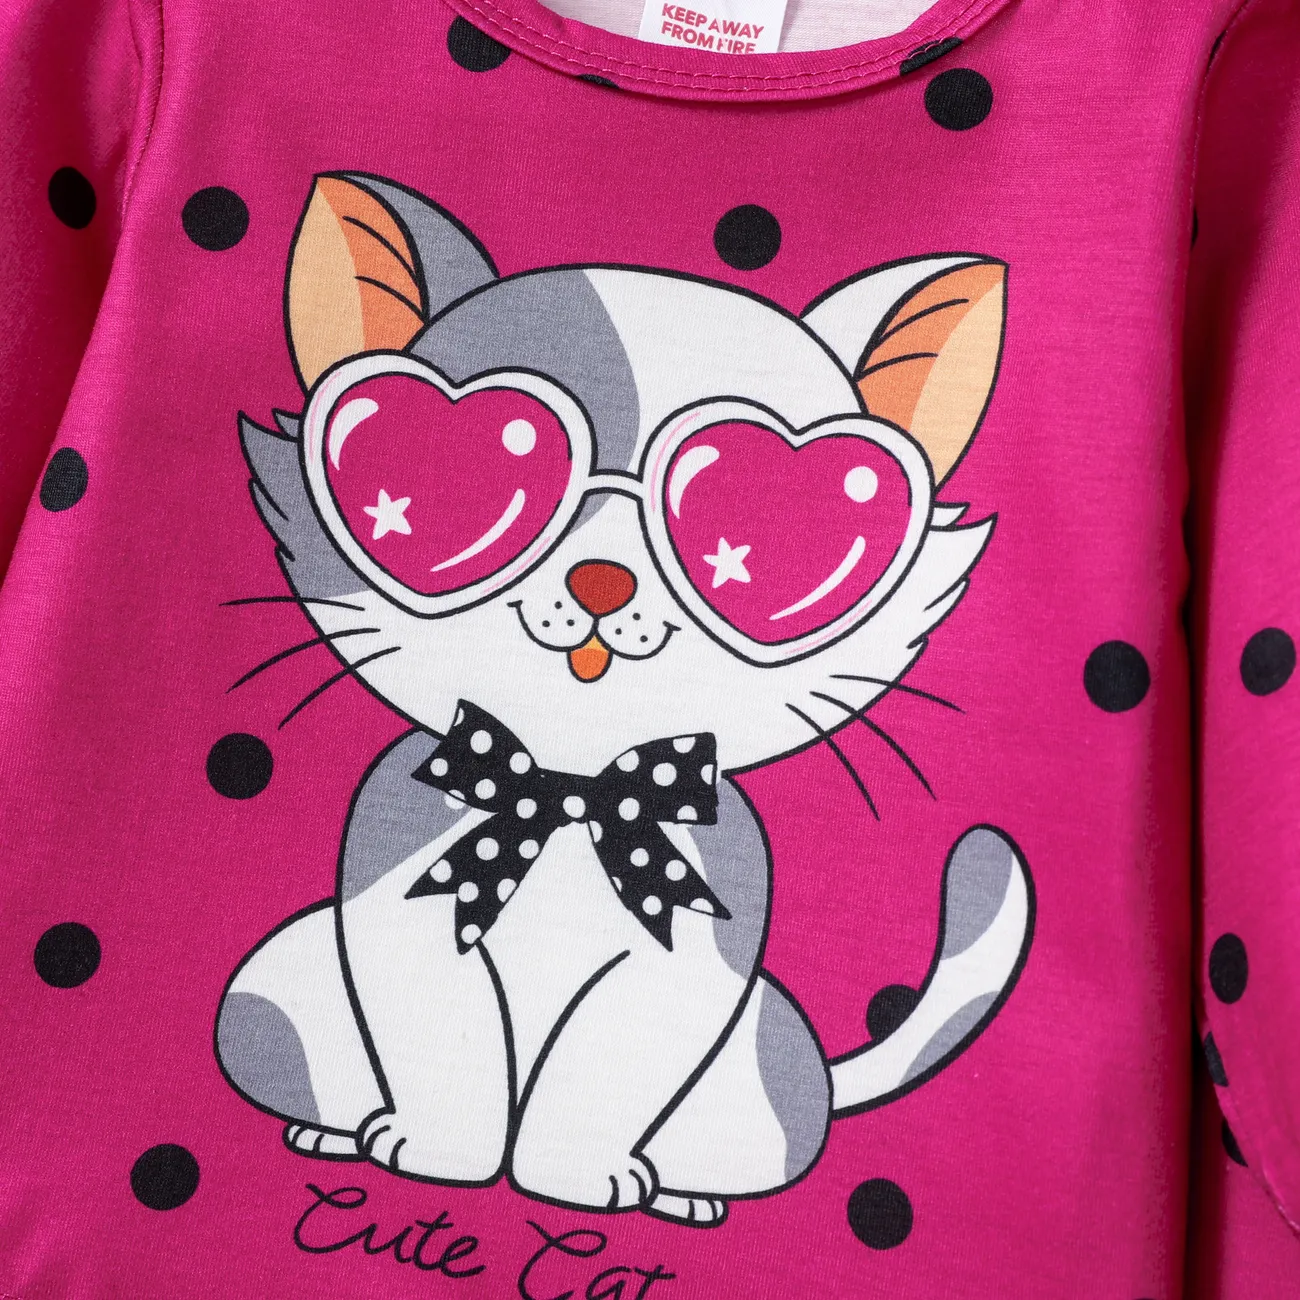 Baby Girl 2pcs Car Print Pajamas Set Hot Pink big image 1